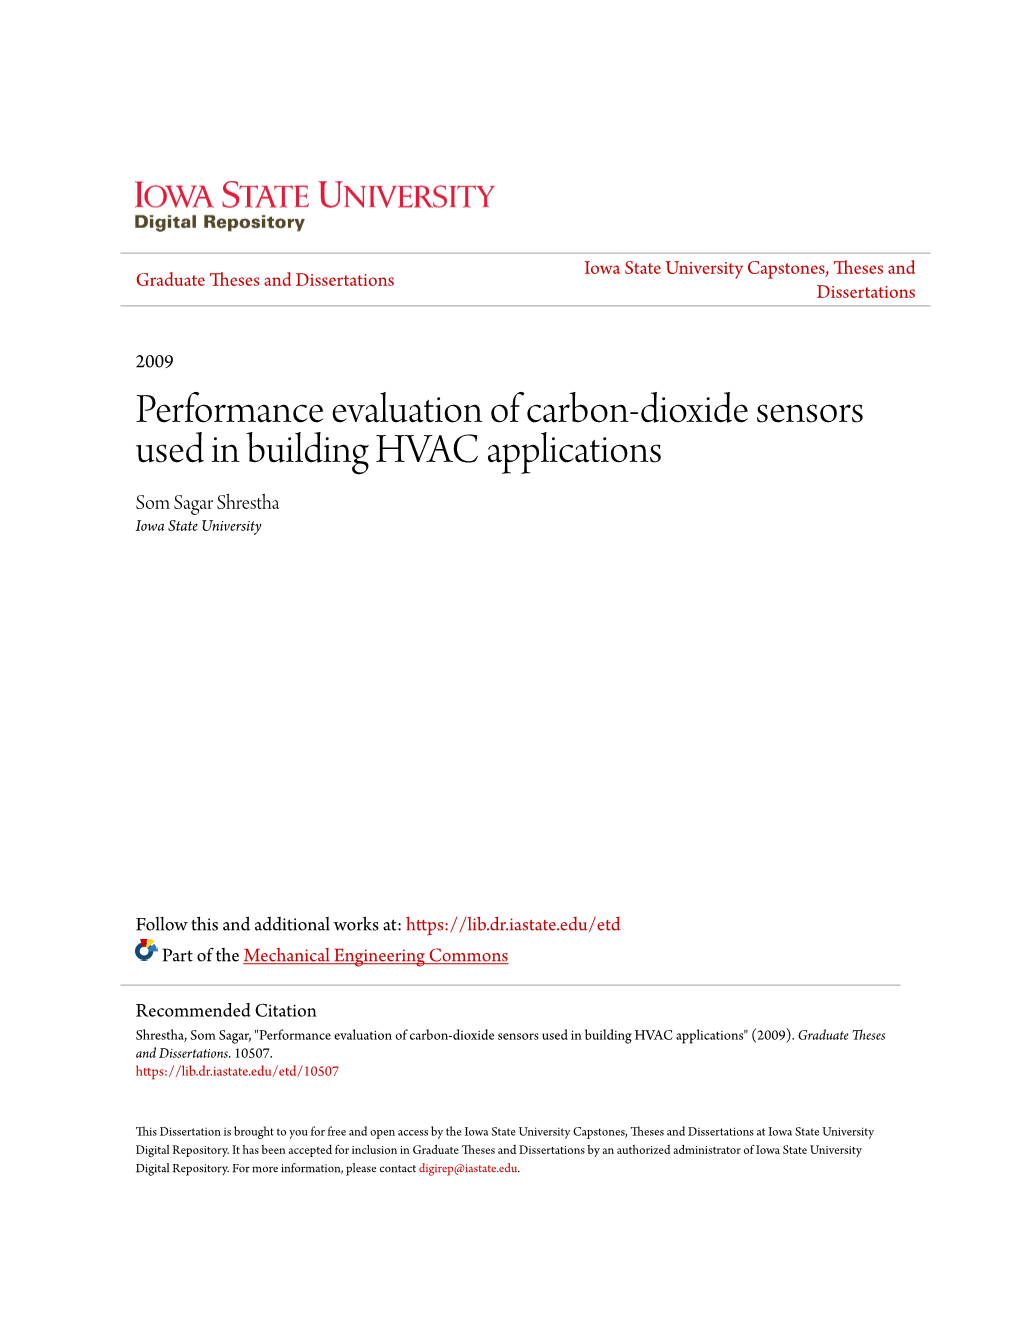 Performance Evaluation of Carbon-Dioxide Sensors Used in Building HVAC Applications Som Sagar Shrestha Iowa State University